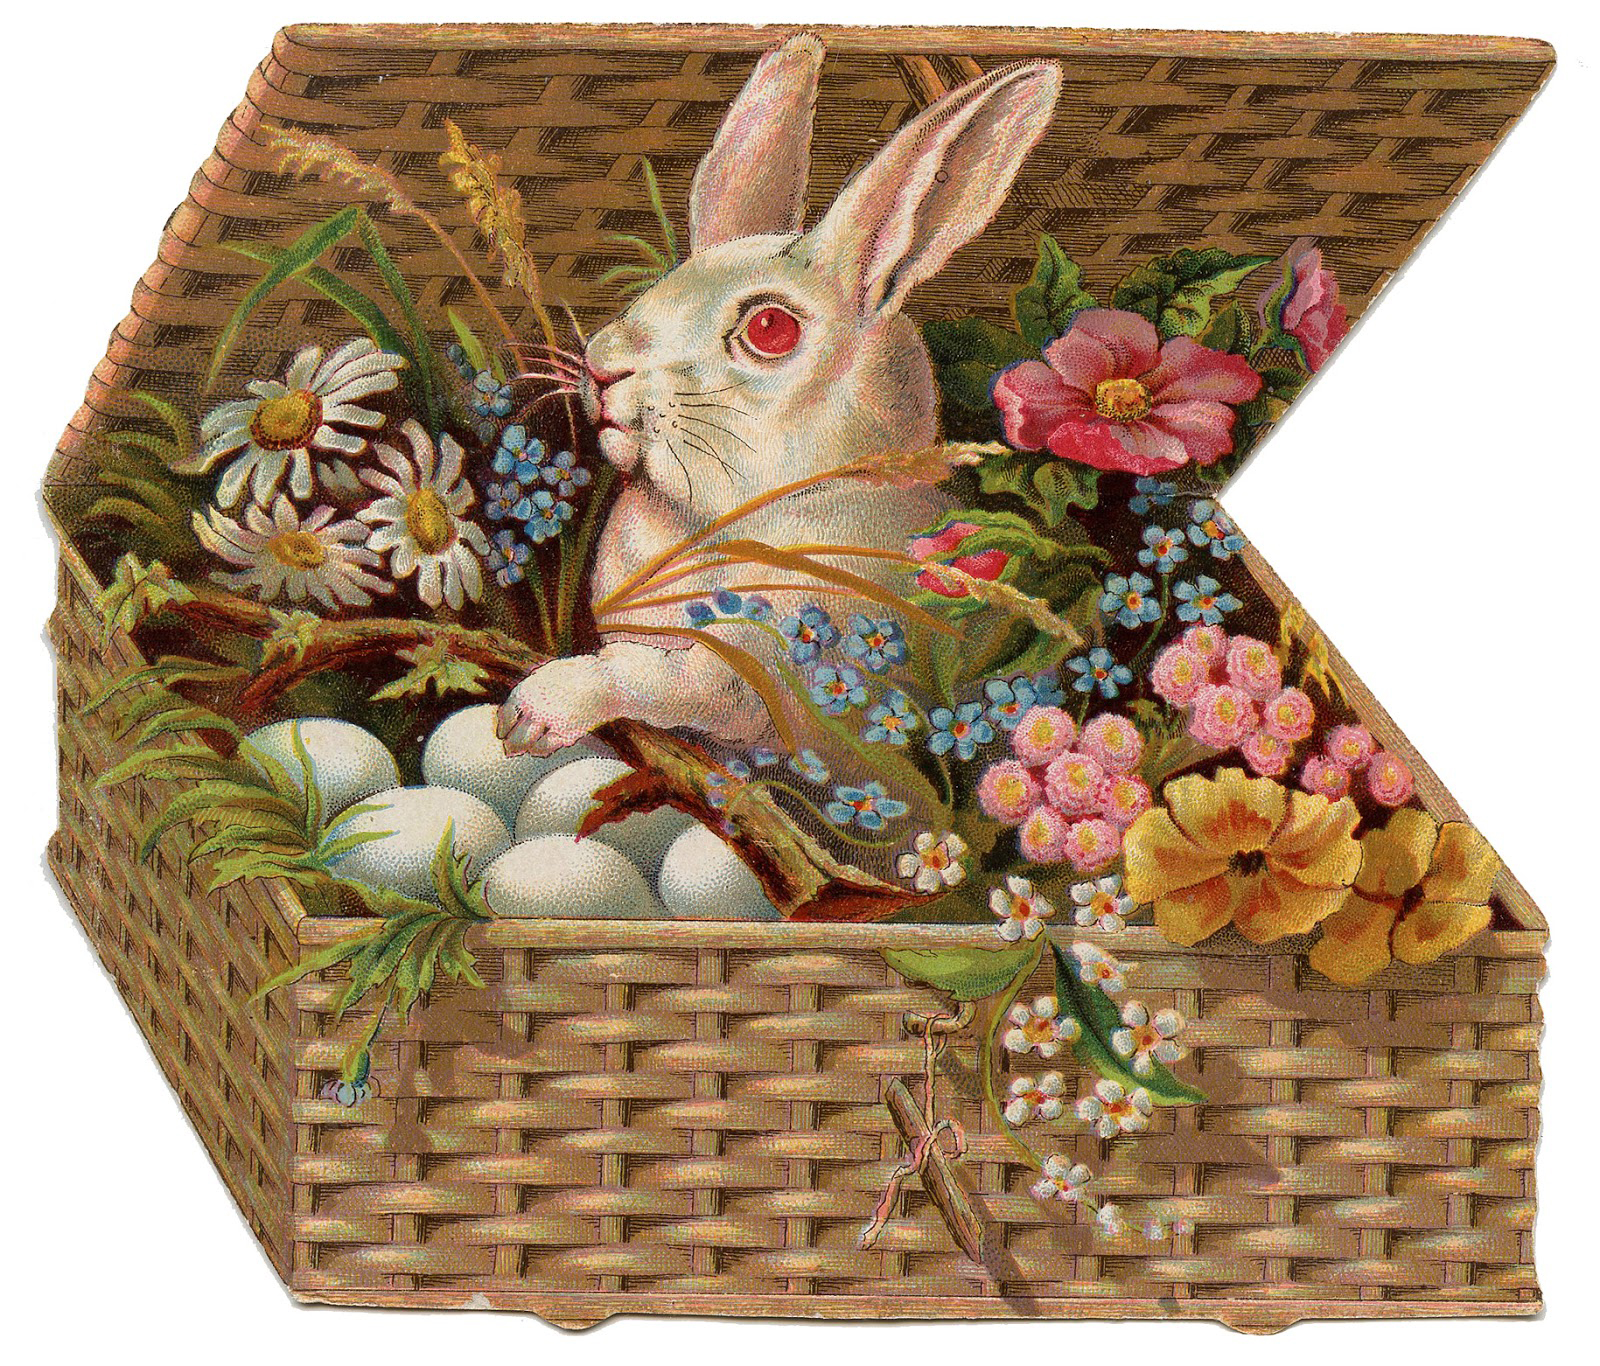 White Rabbit in Basket